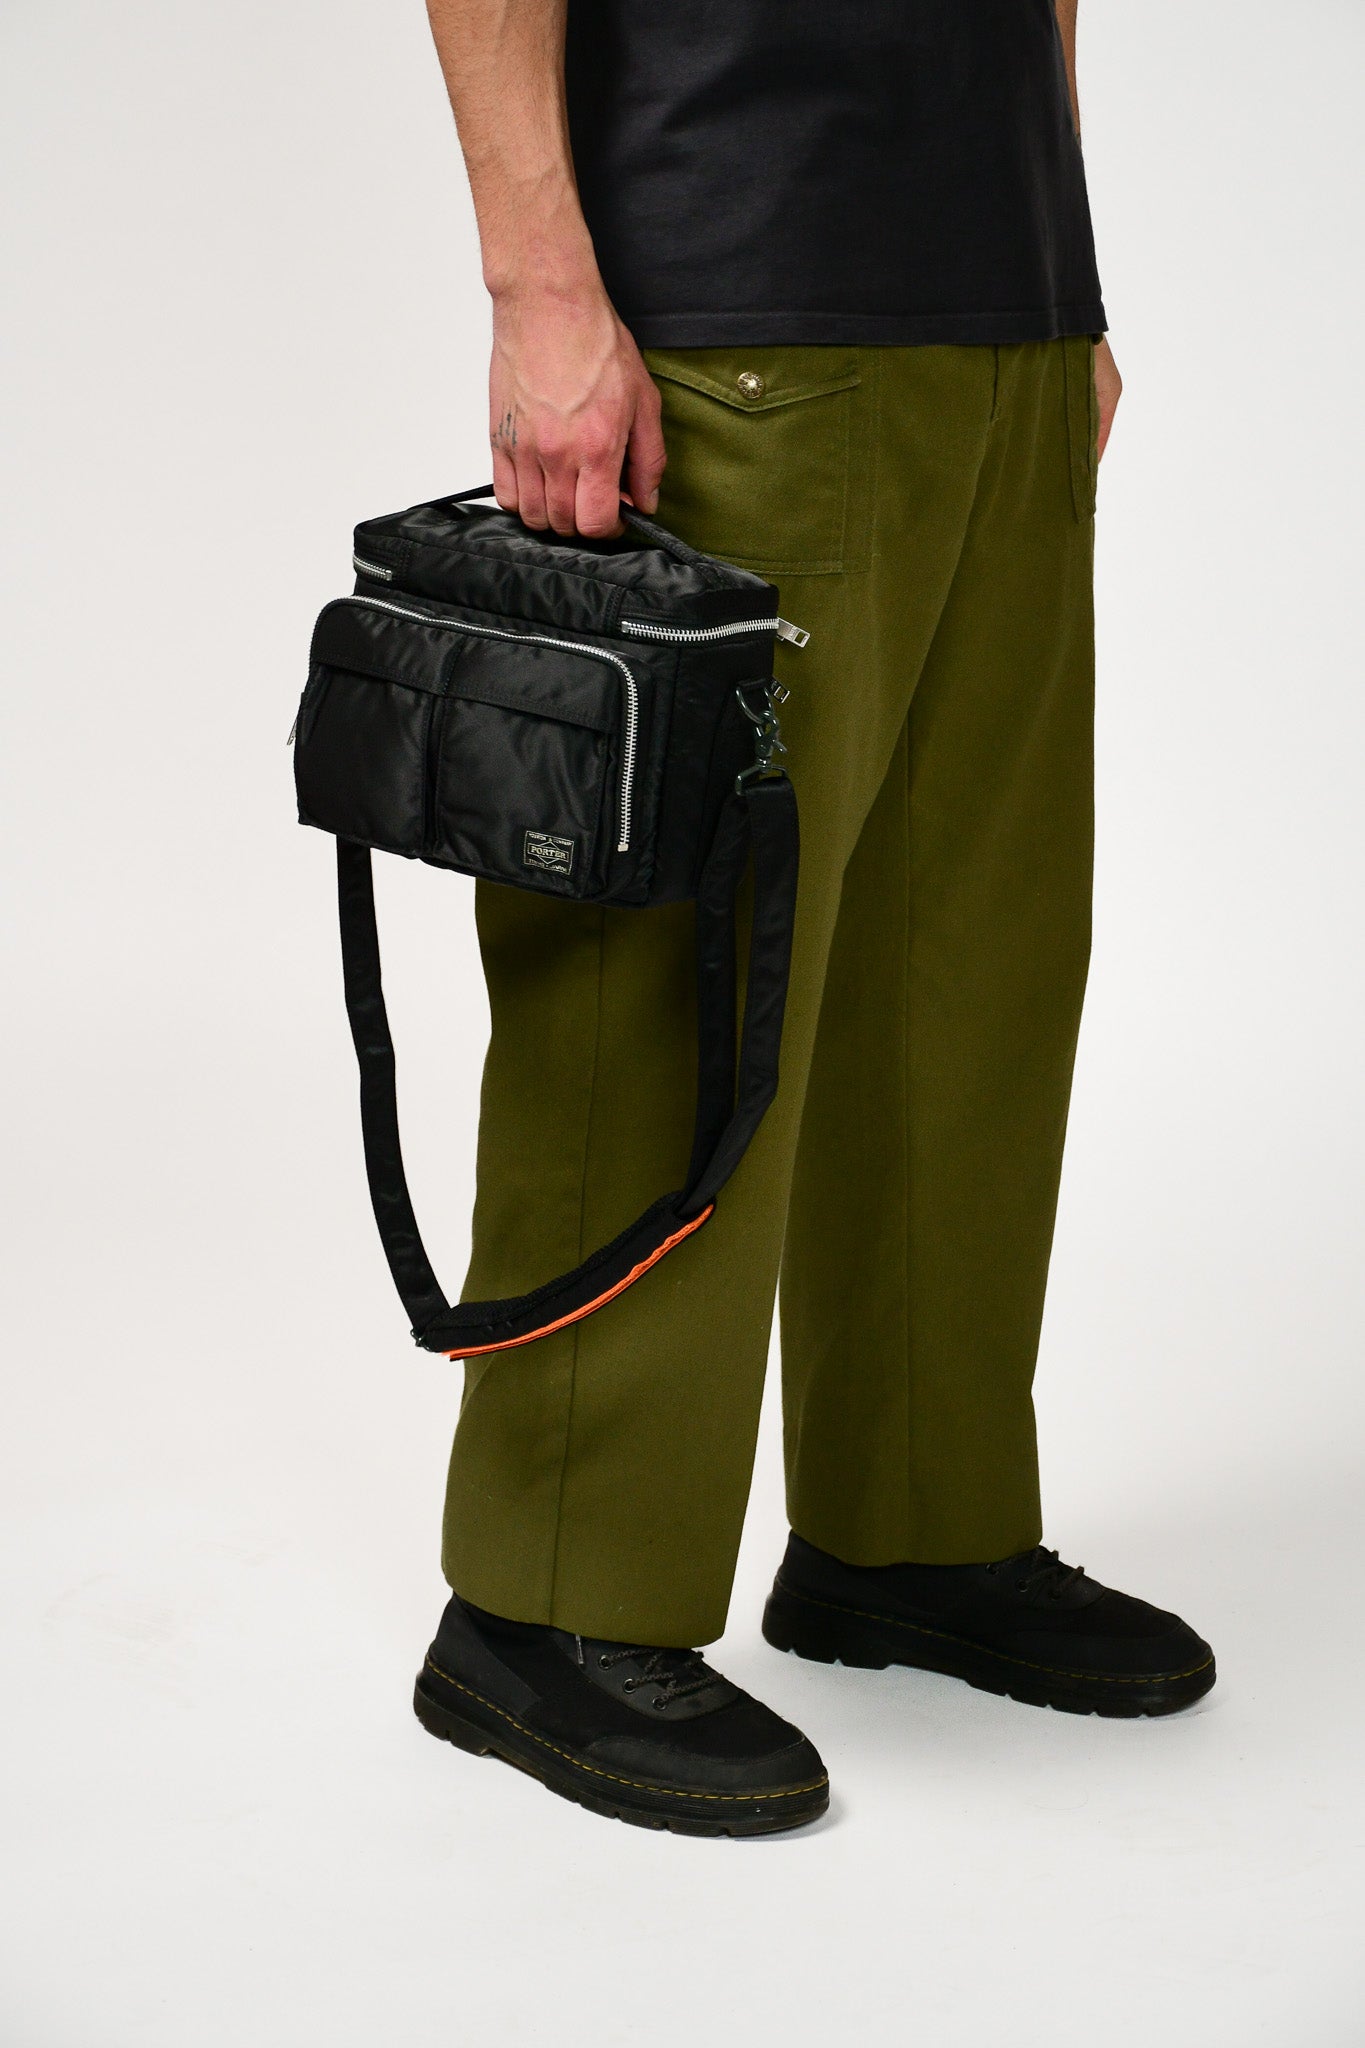 Porter-Yoshida & Co. Tanker Small Shoulder Bag Black at CareOfCarl.com